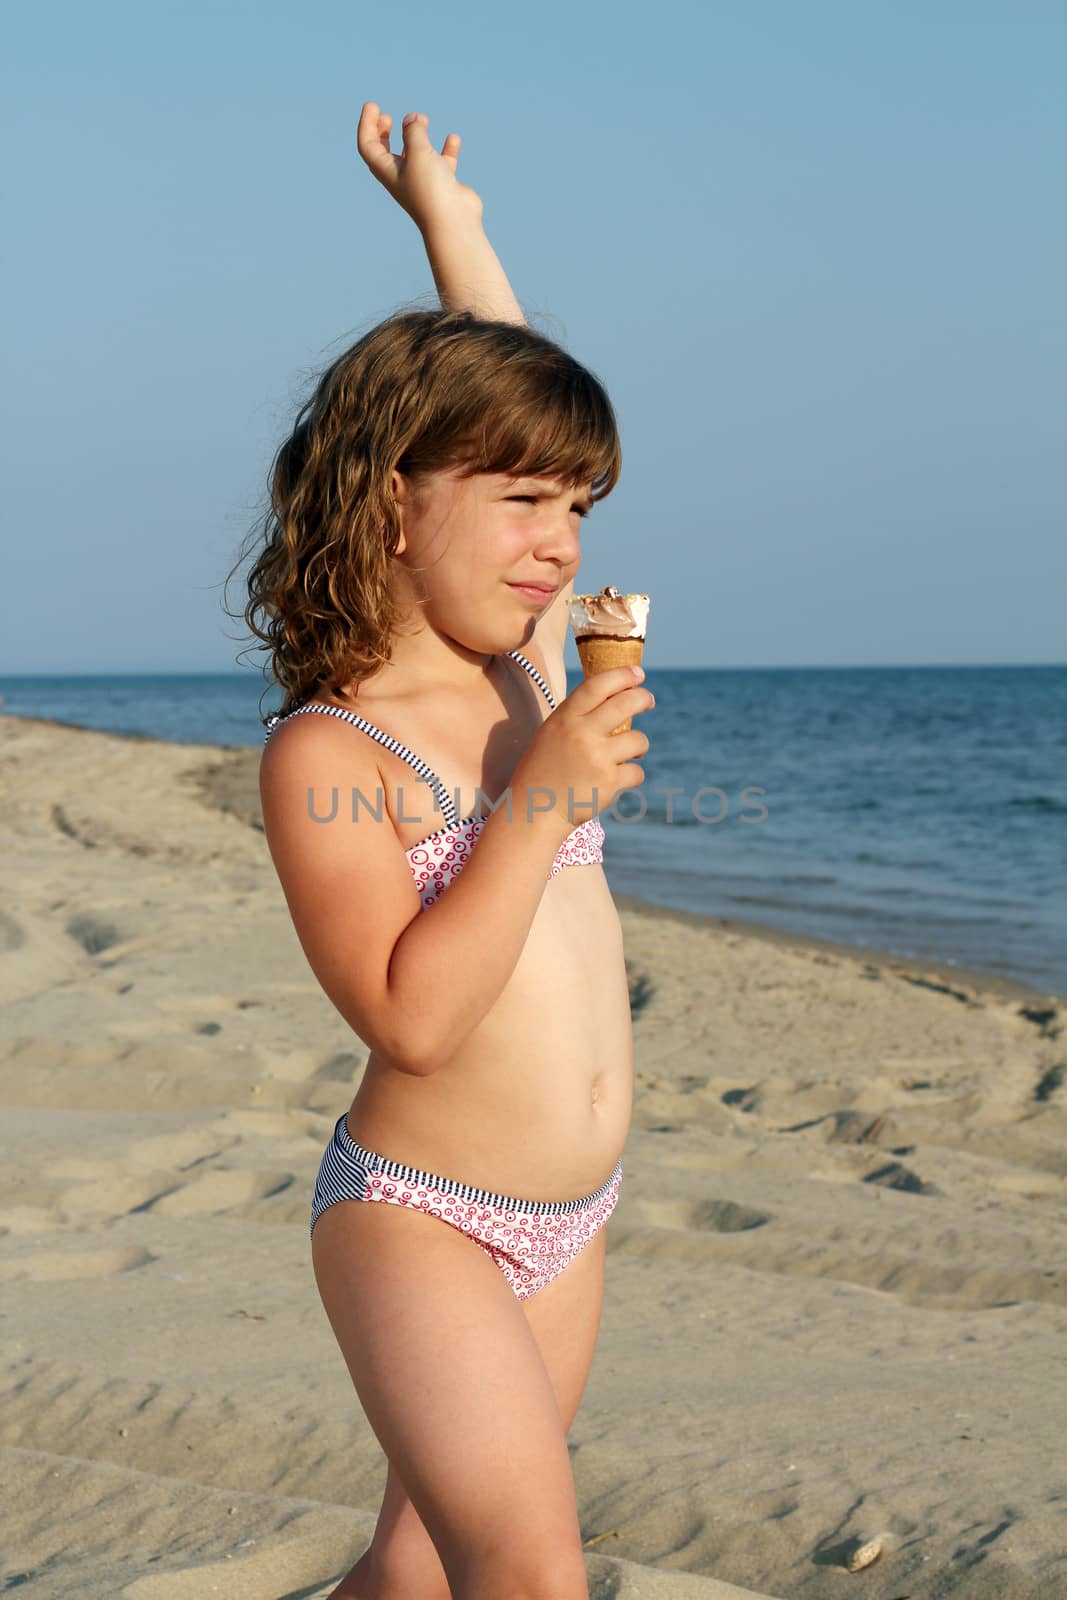 child eat ice cream on beach by goce